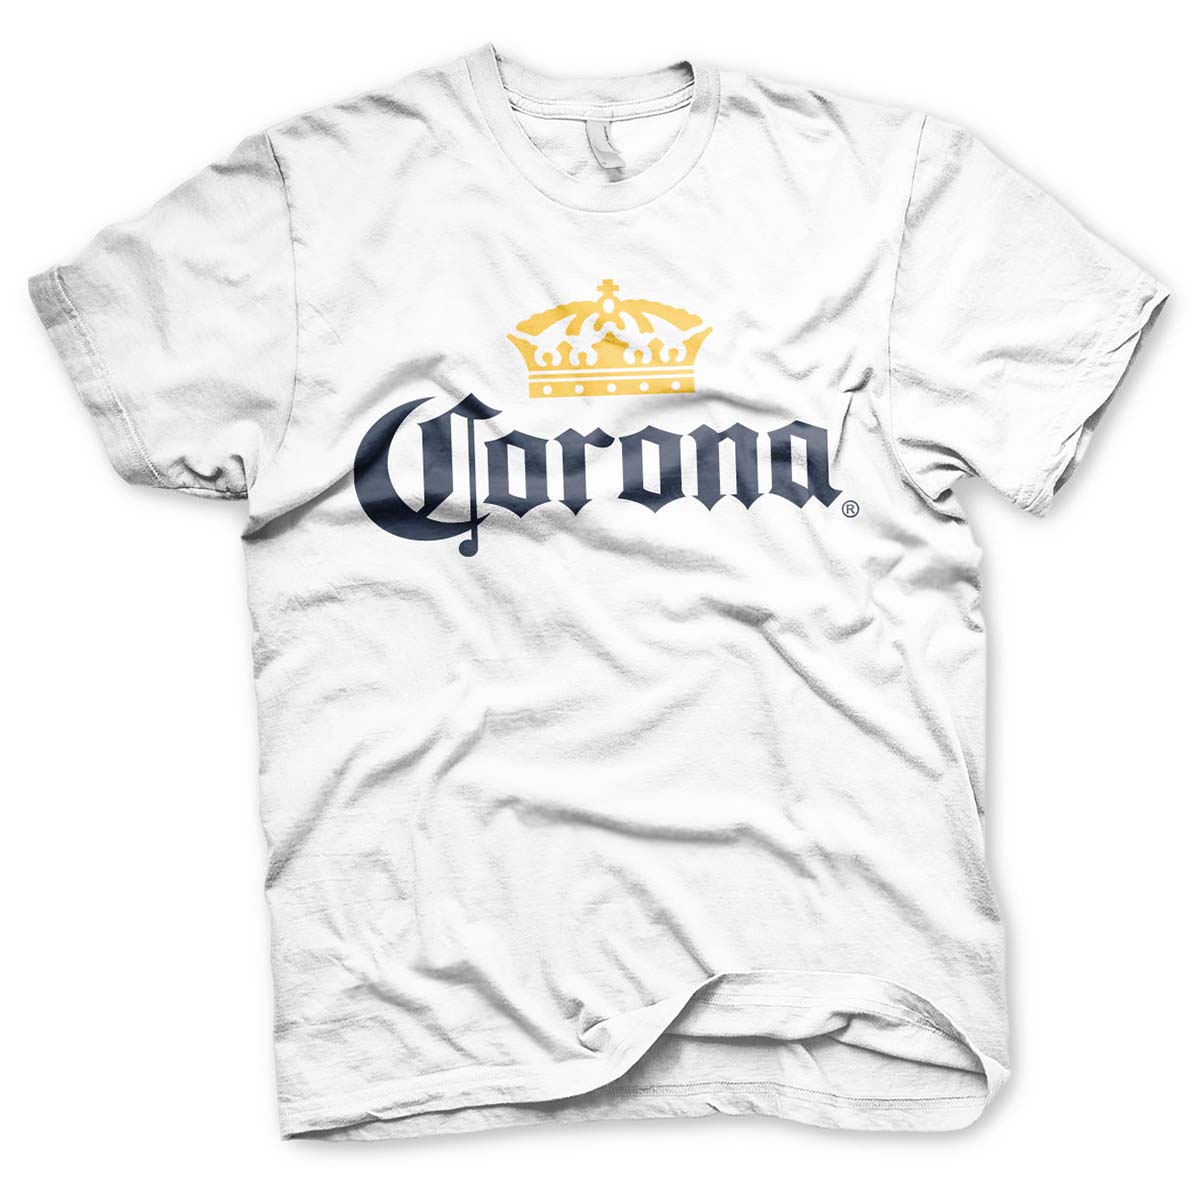 T-shirt, Corona beer L